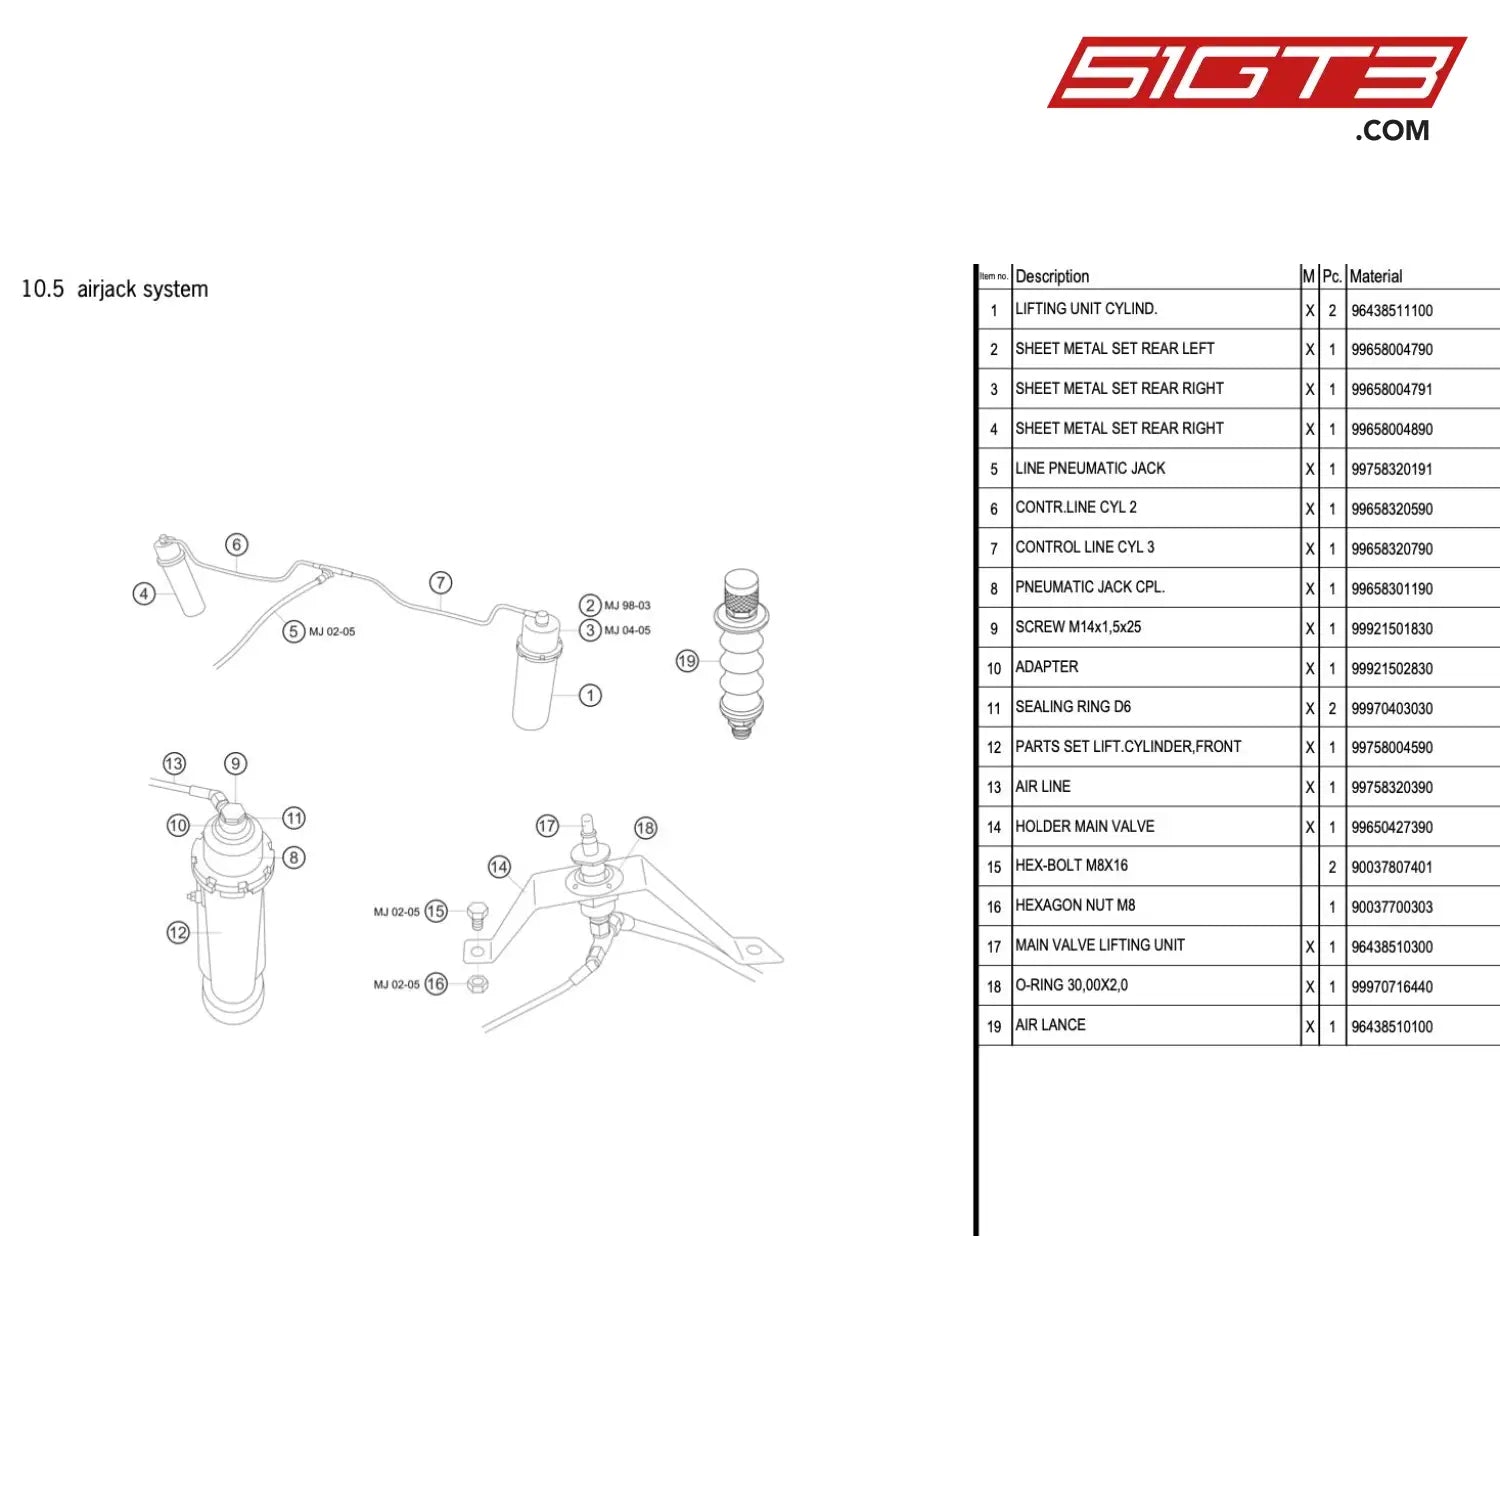 Sheet Metal Set Rear Right - 99658004890 [Porsche 911 Gt3 Cup Type 996] Airjack System